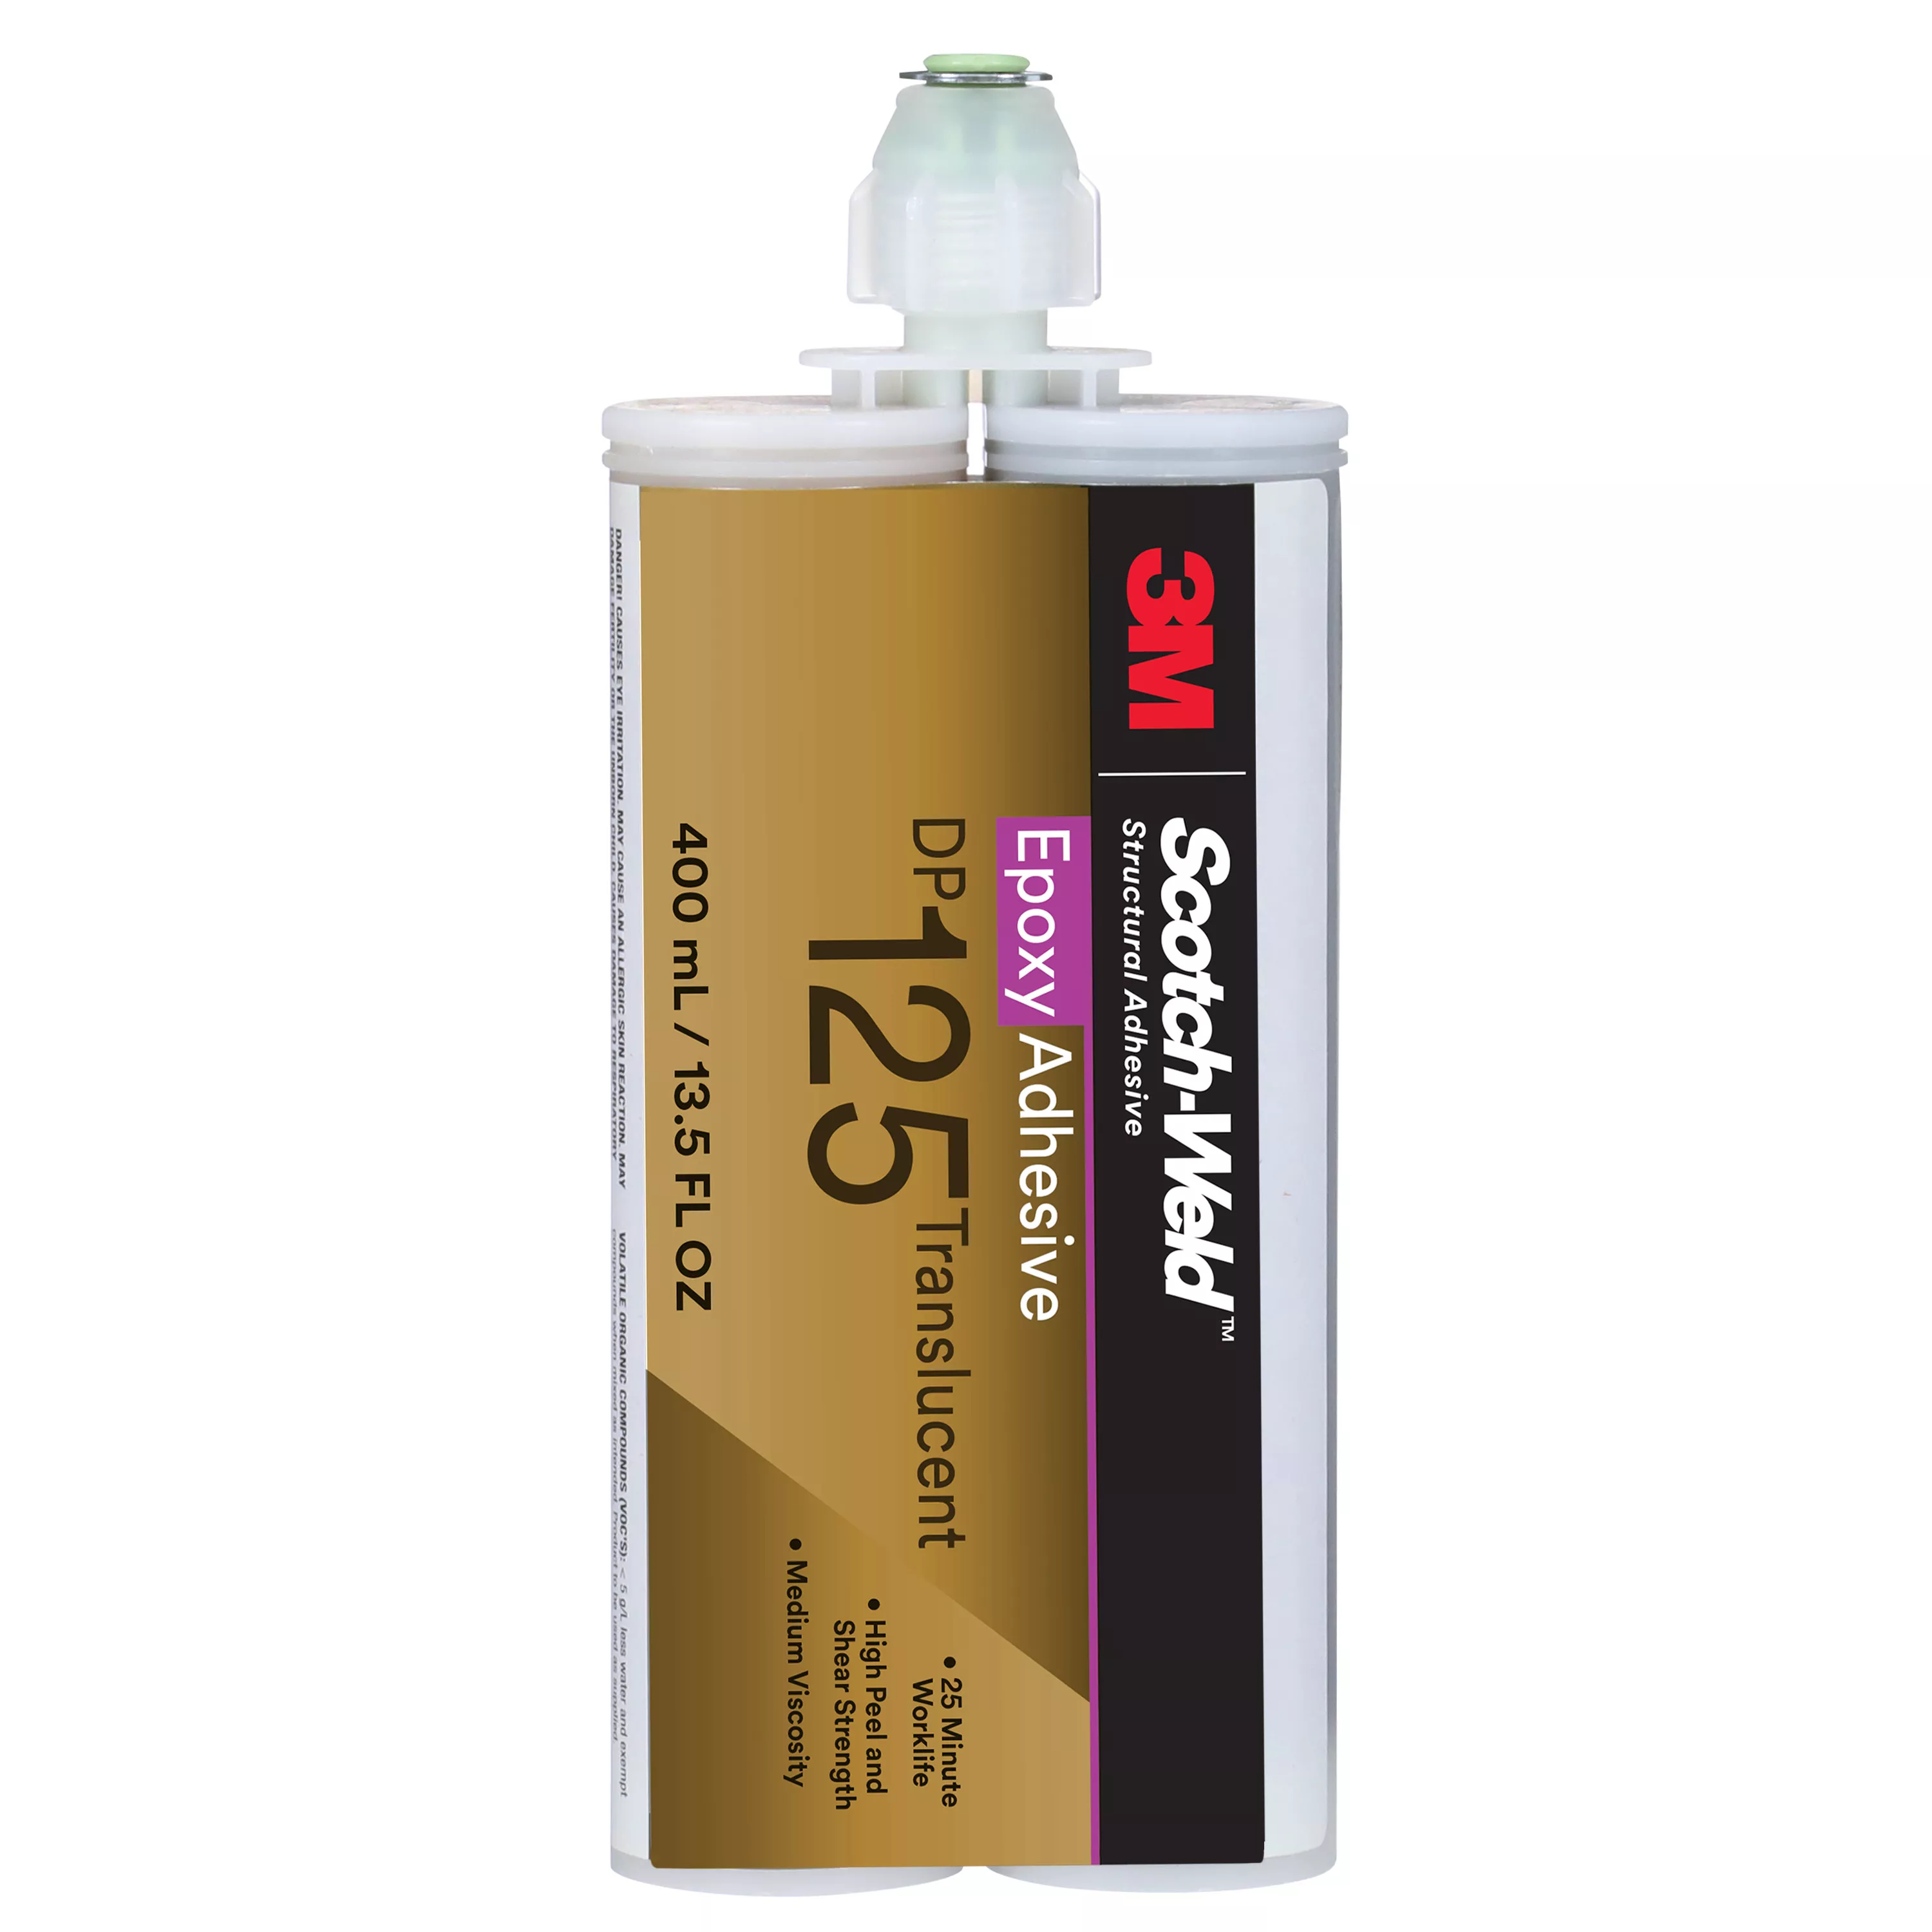 SKU 7000121262 | 3M™ Scotch-Weld™ Epoxy Adhesive DP125